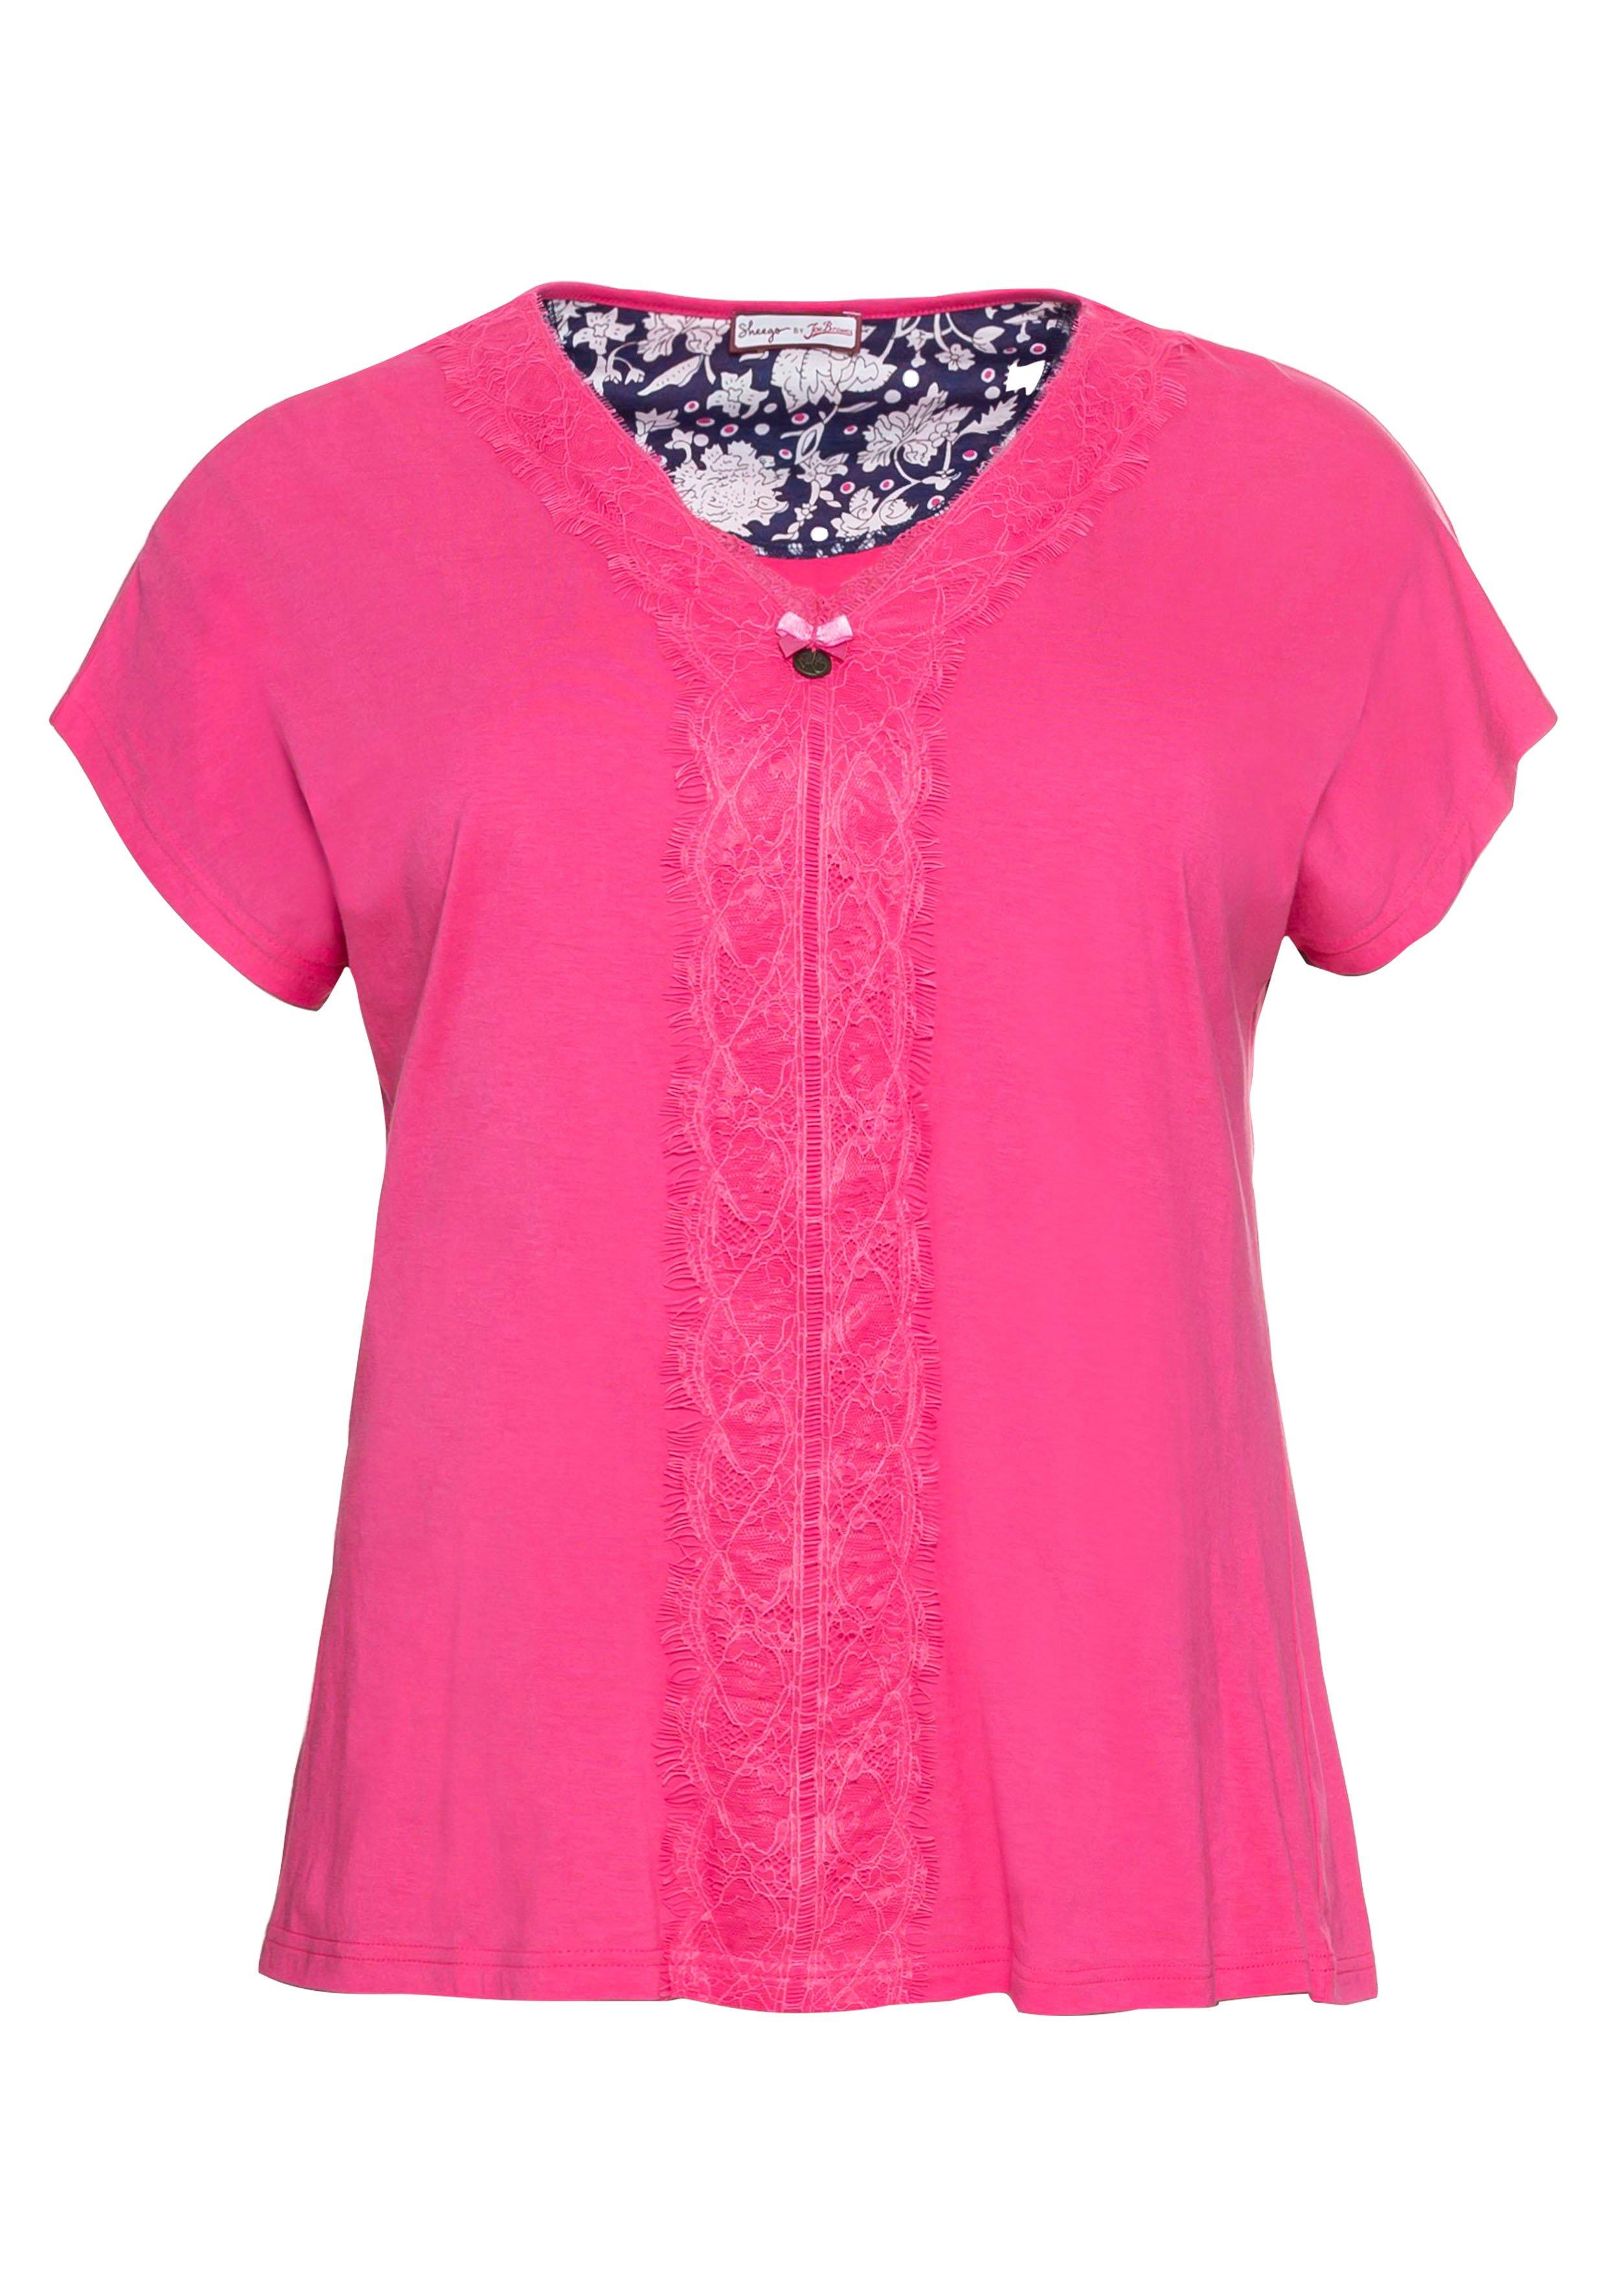 Lounge-Shirt in Oversized-Form mit - sheego femininen Details pink 